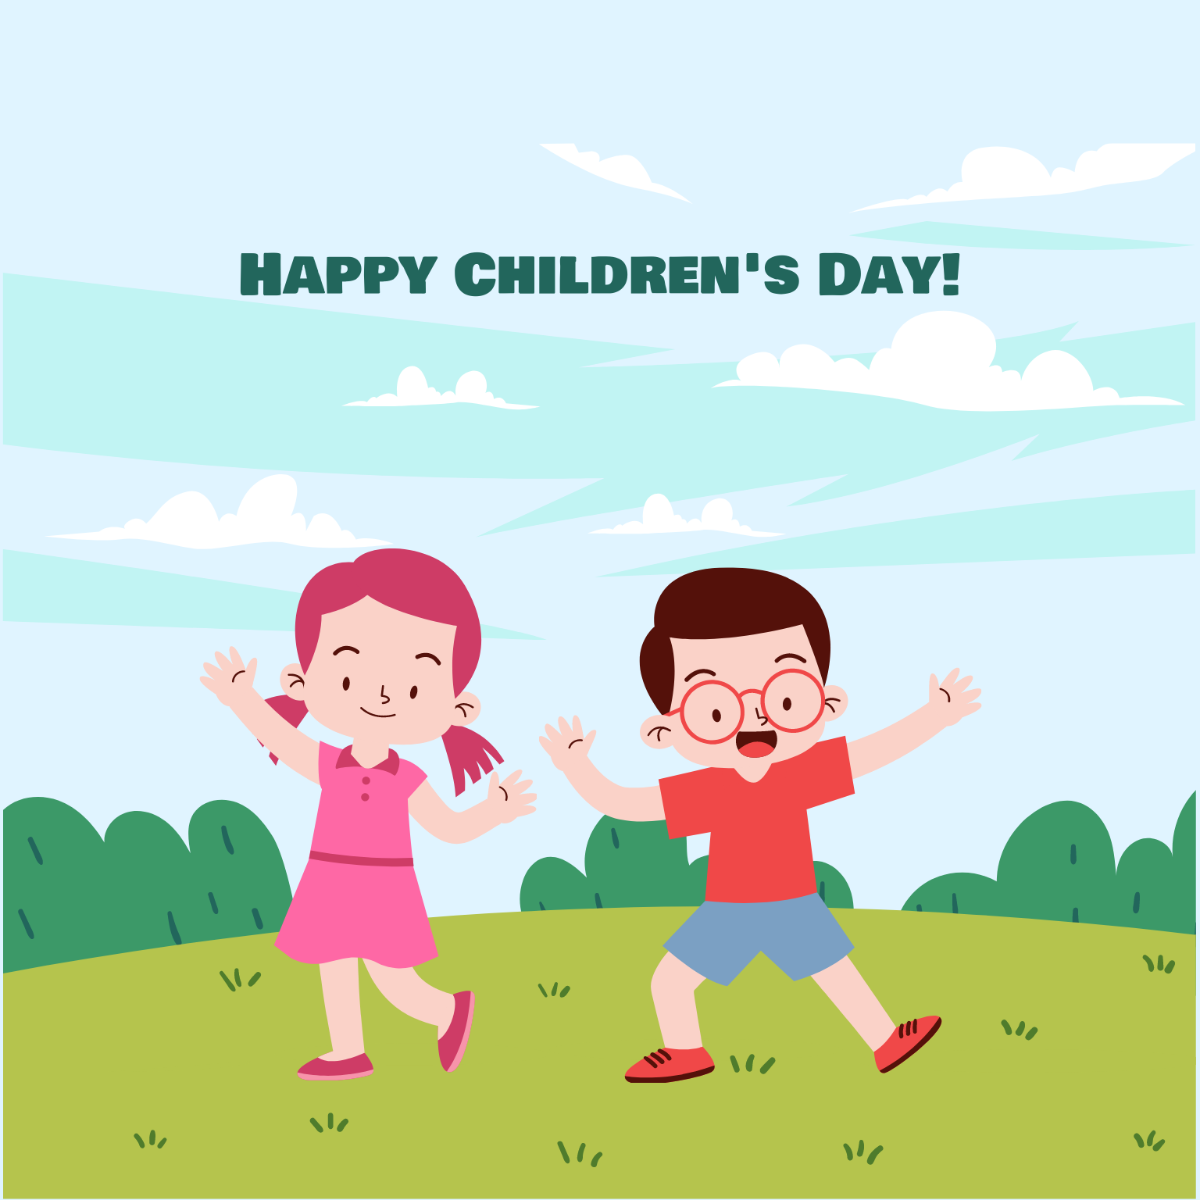 Happy Children's Day Illustration